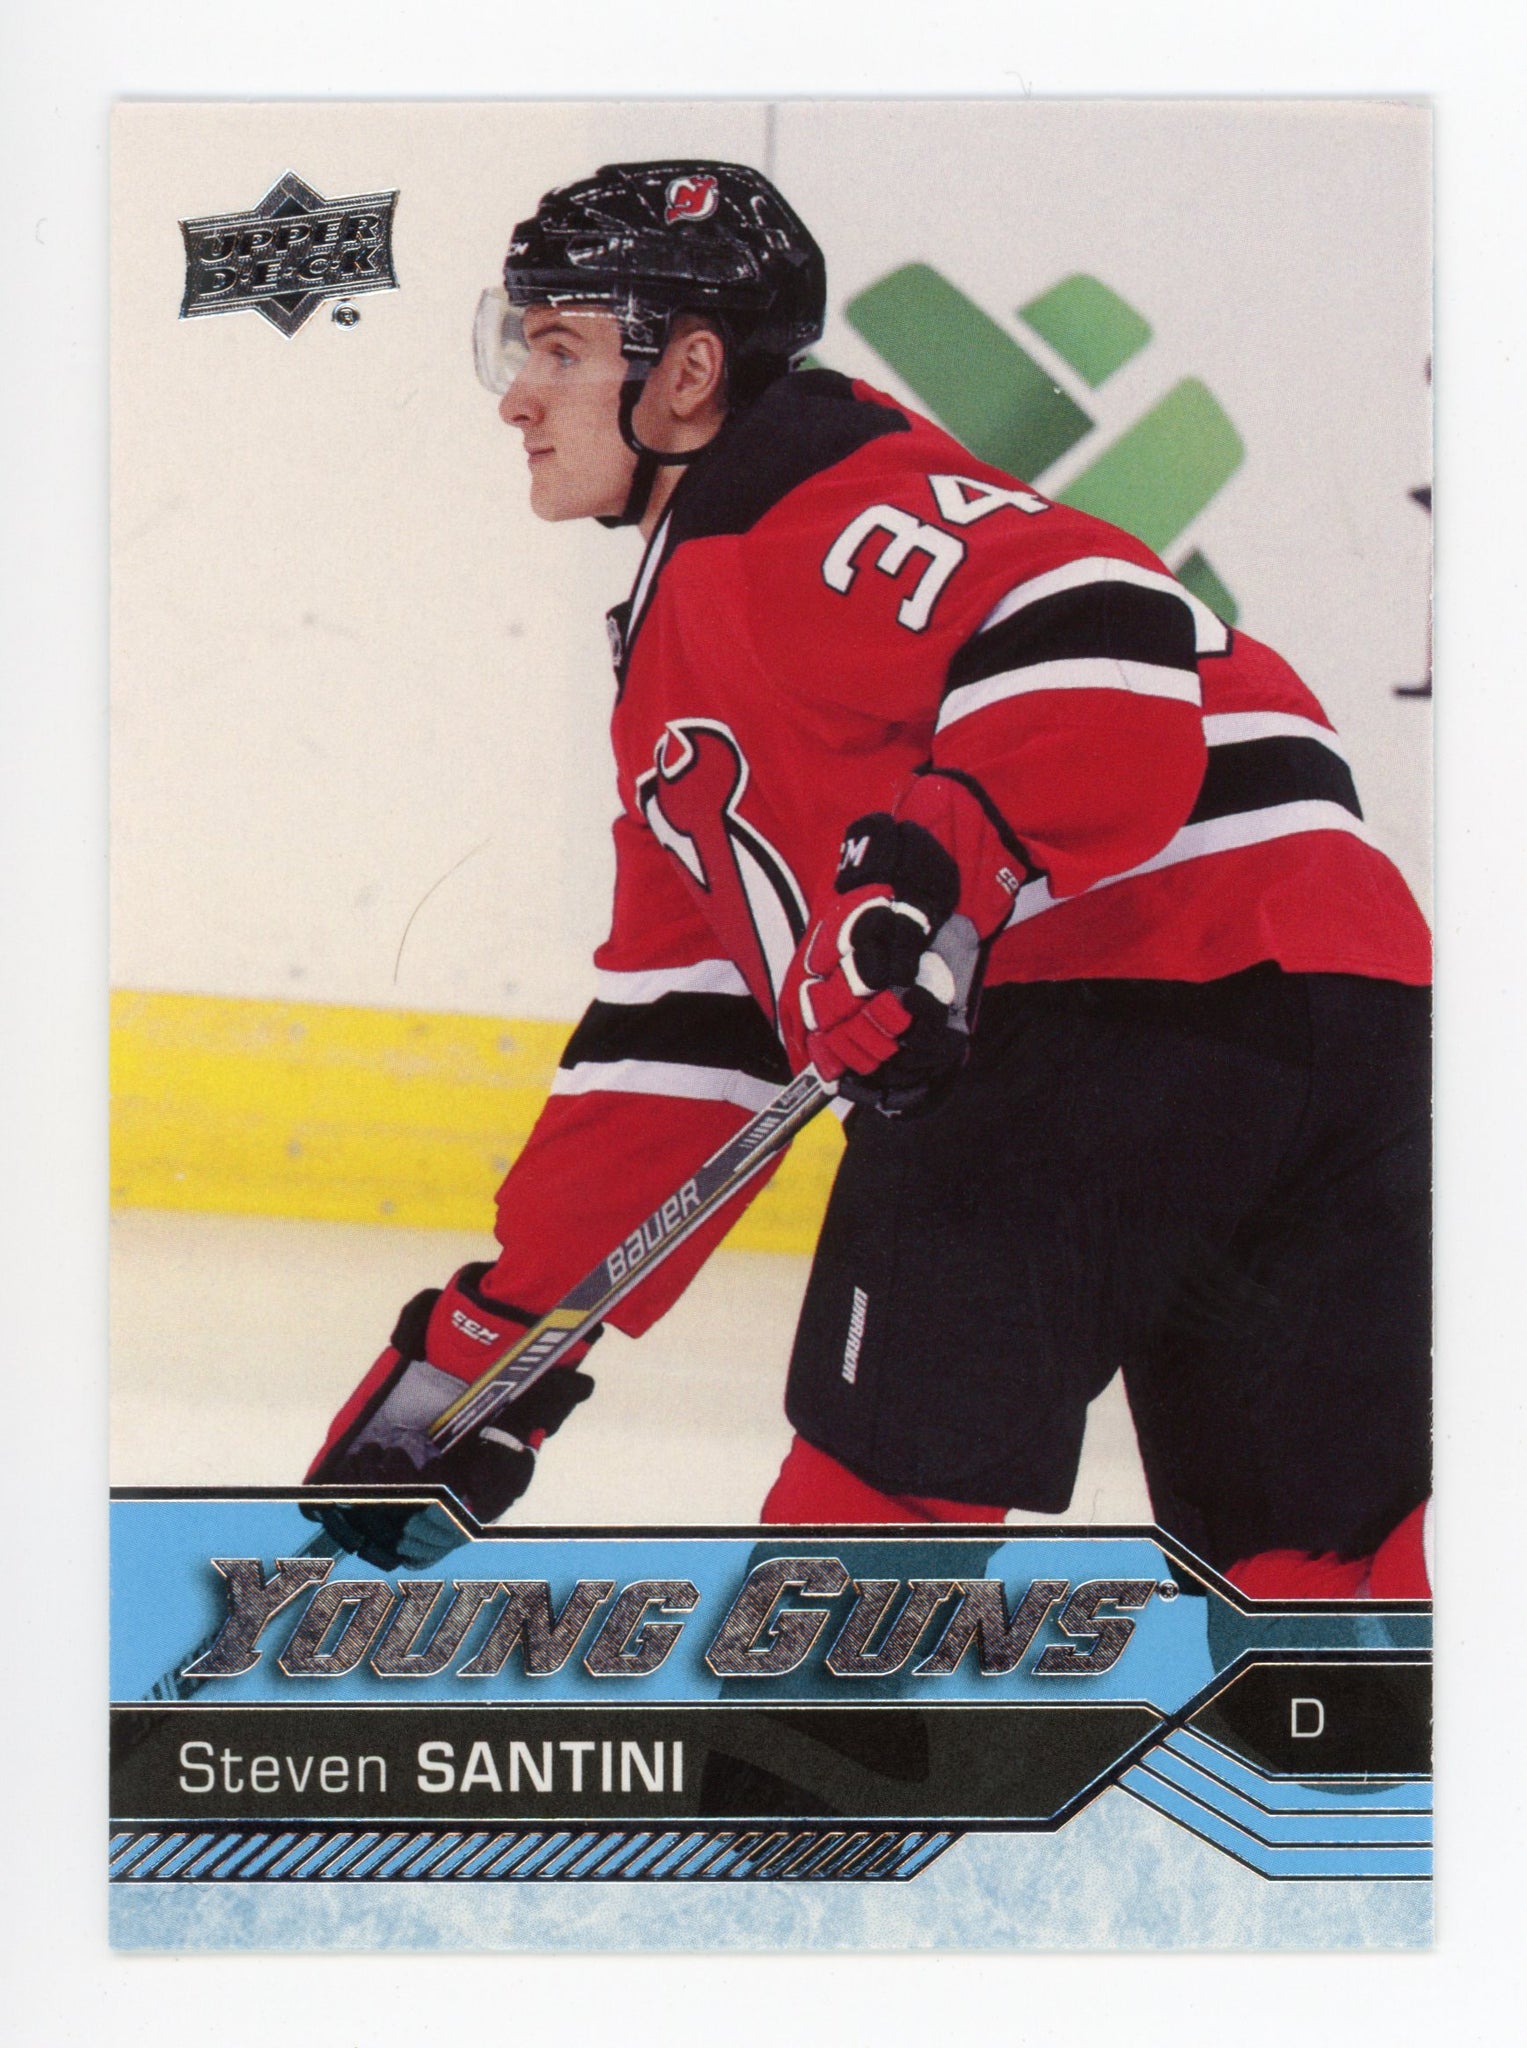 2016-2017 Steven Santini Young Guns Upper Deck New Jersey Devils #207